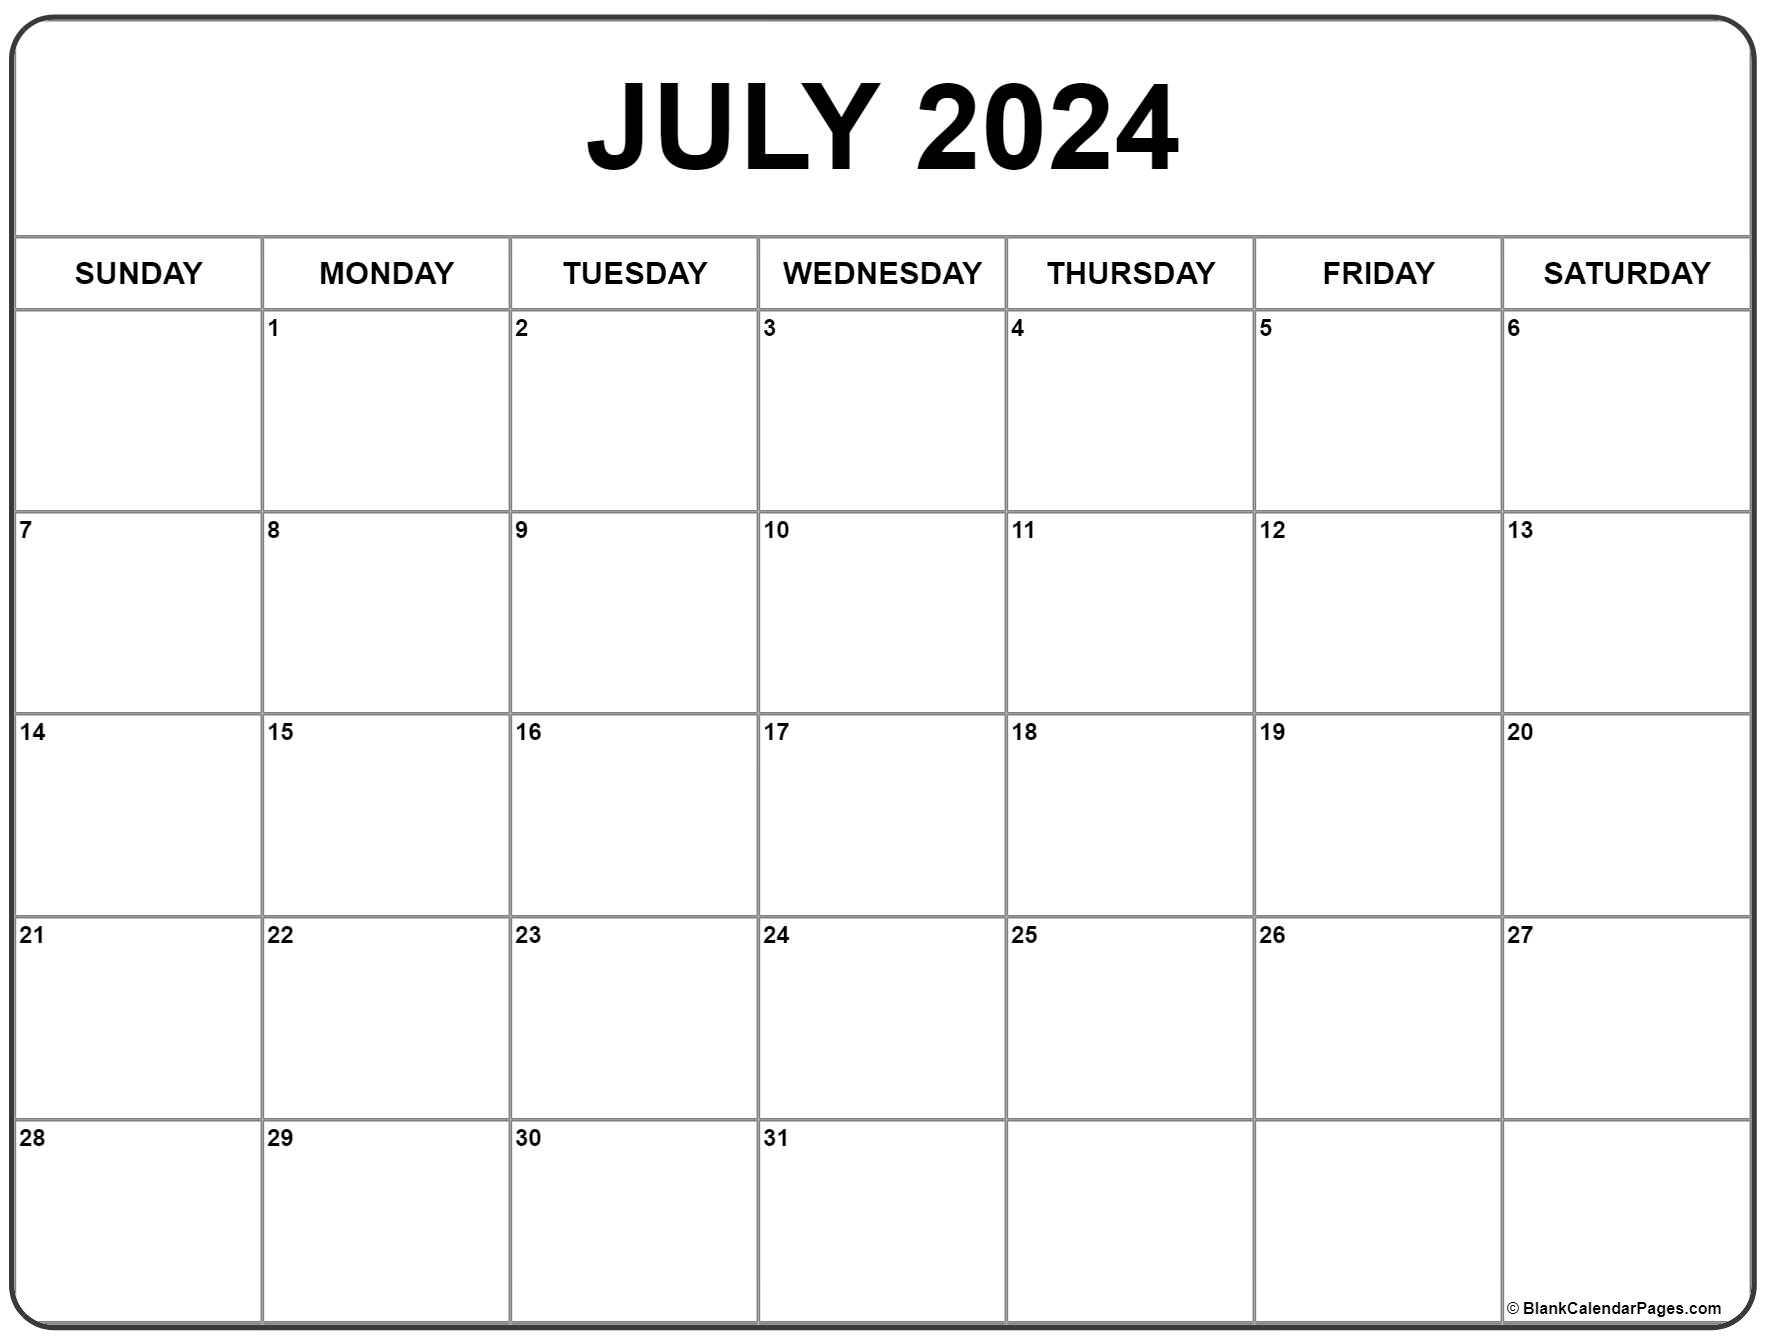 July 2024 Calendar | Free Printable Calendar | Printable Calendar 2024 July